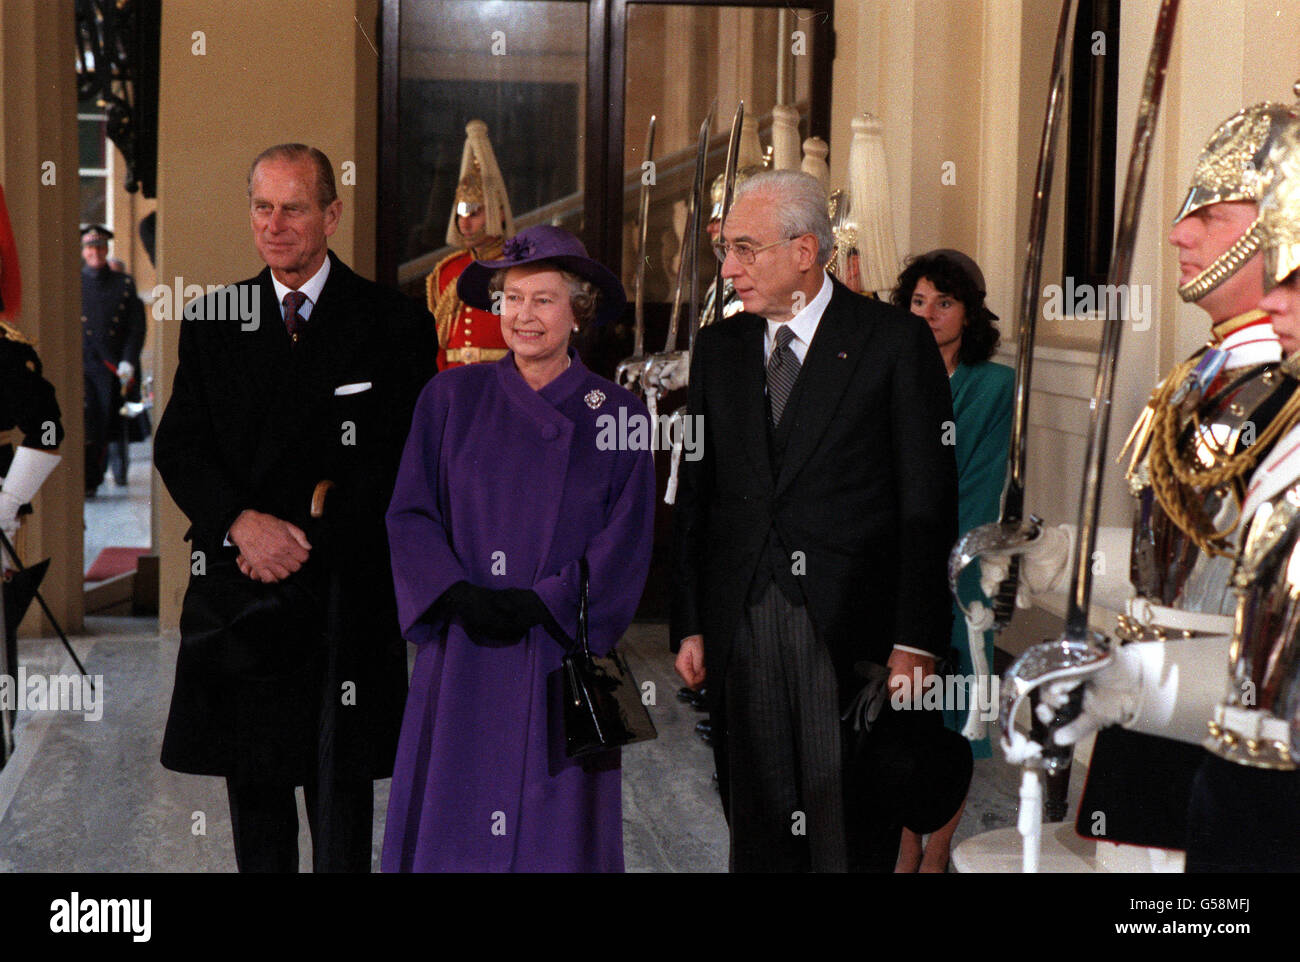 Politics - State Visit of President Cossiga of Italy - Buckingham Palace, London Stock Photo